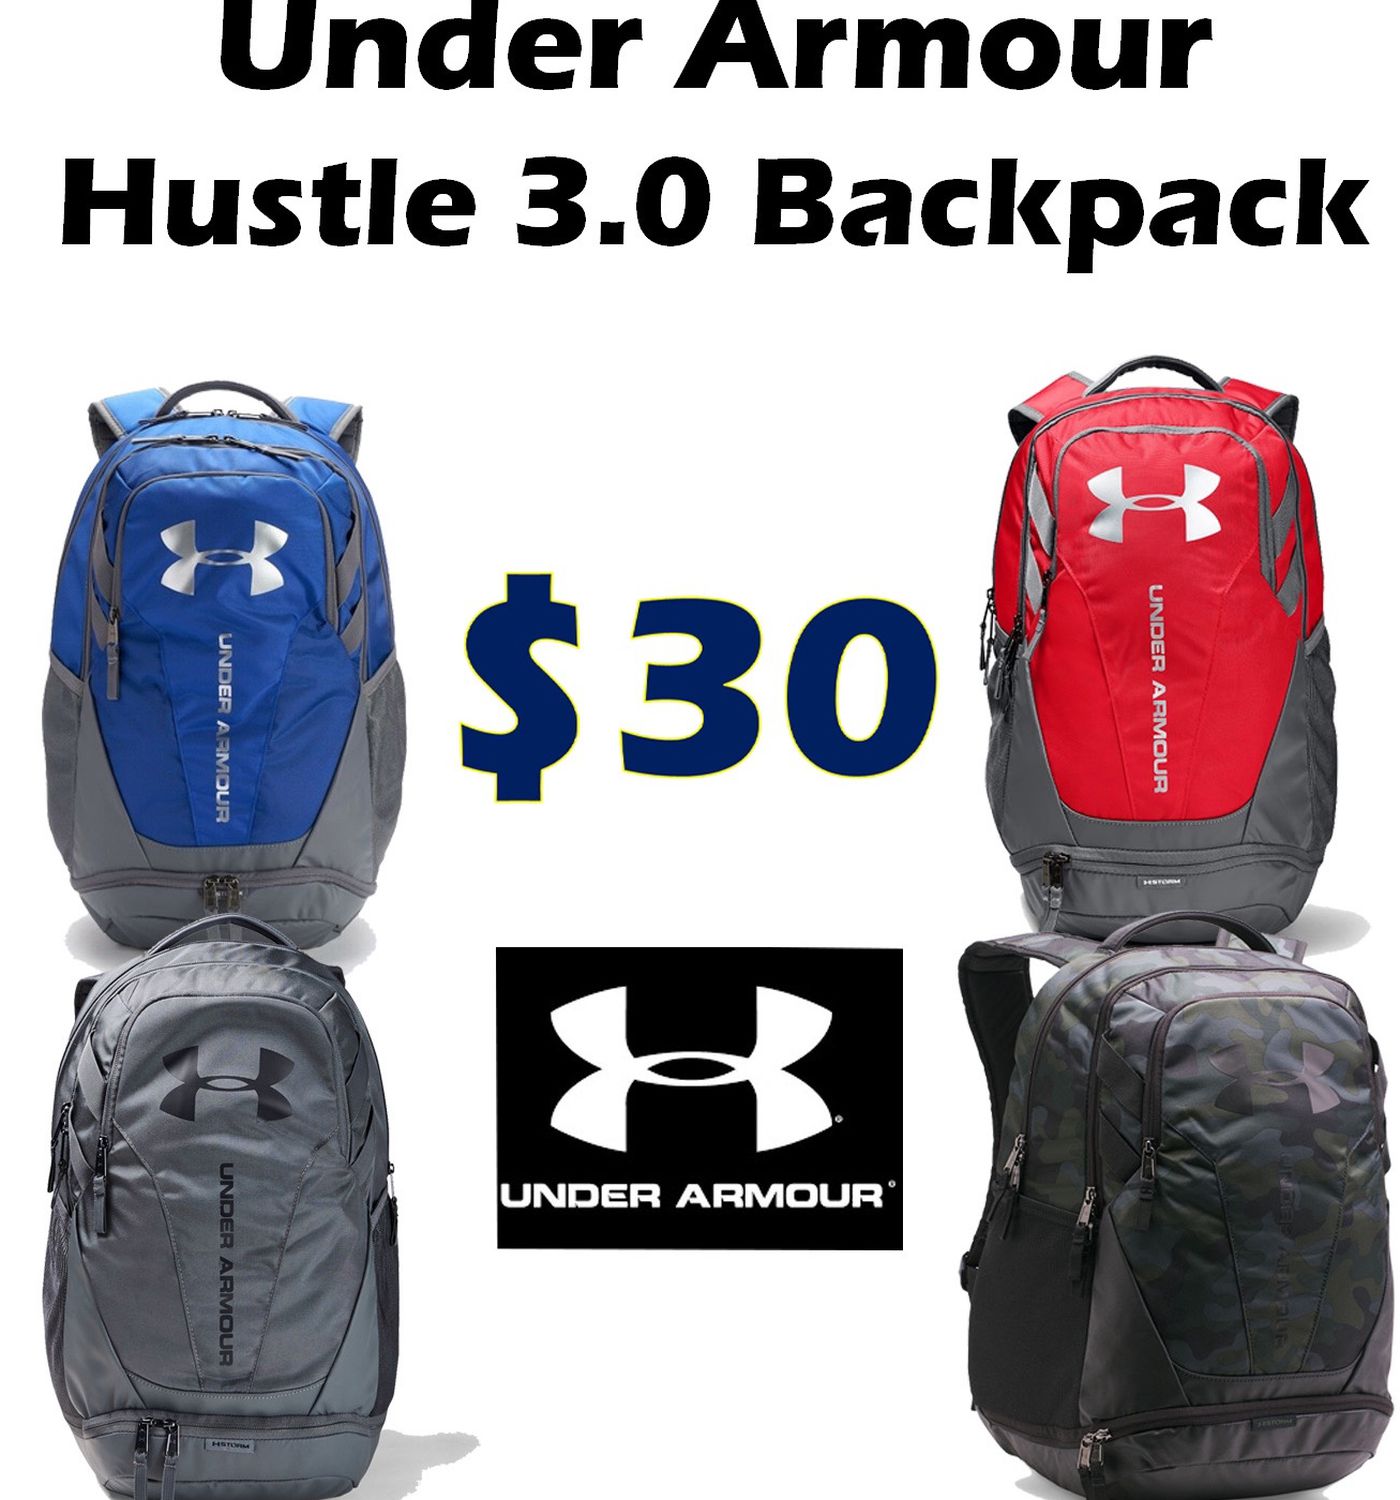 Under Armour Hustle 3.0 Backpack Sales